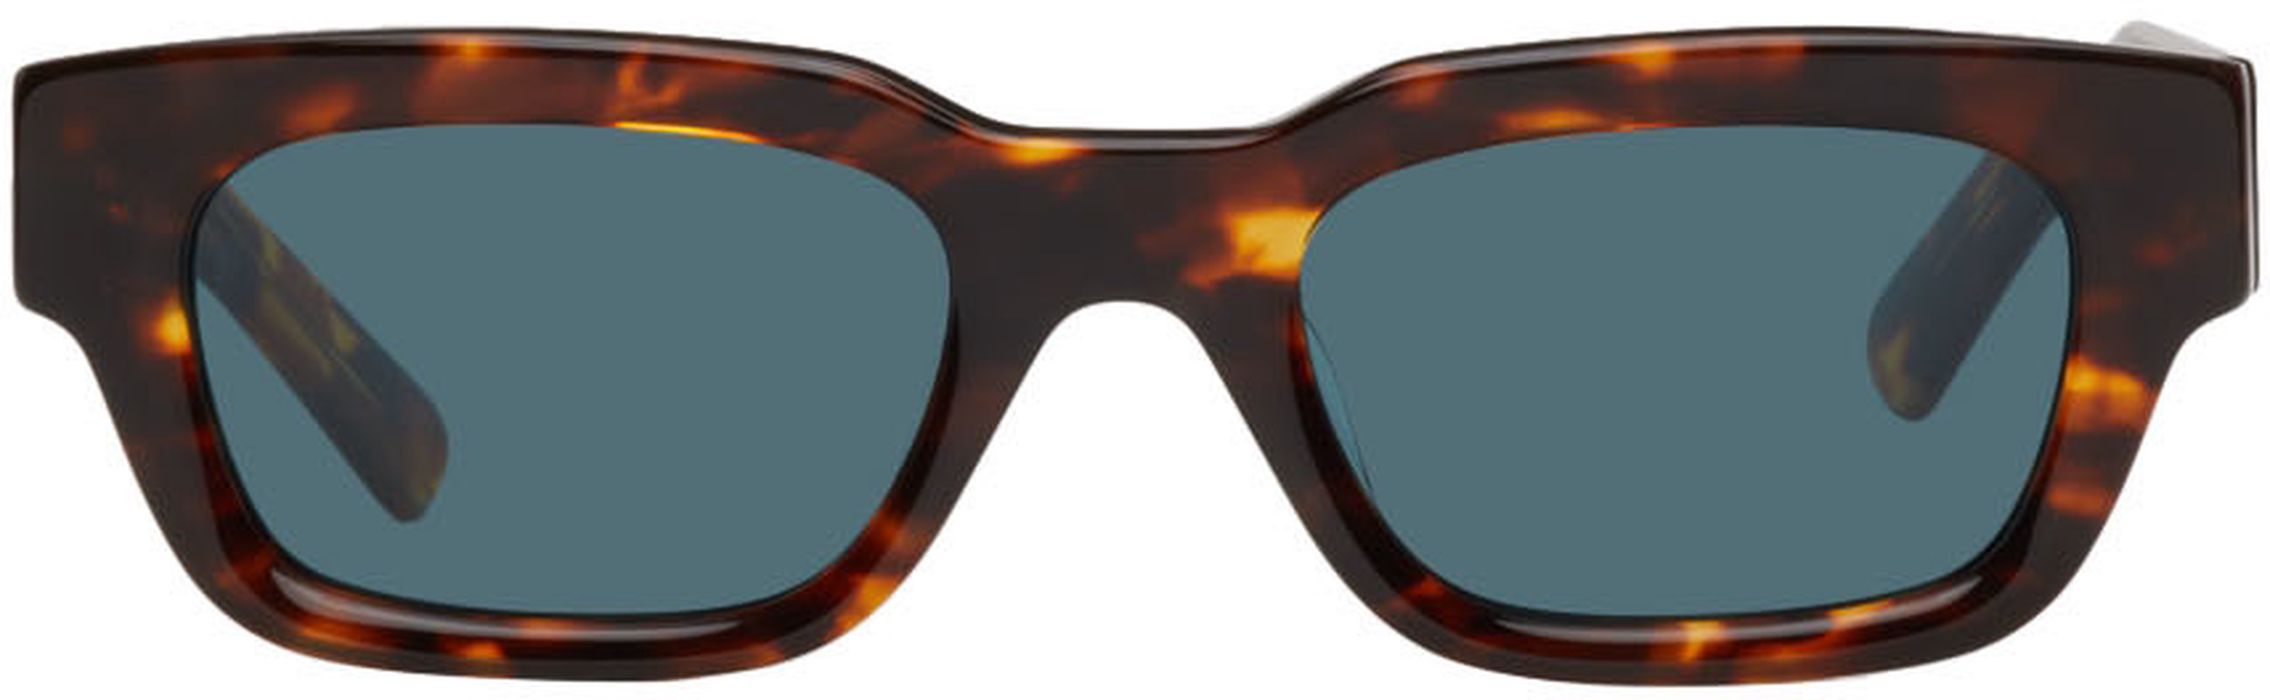 Akila Tortoiseshell Zed Sunglasses